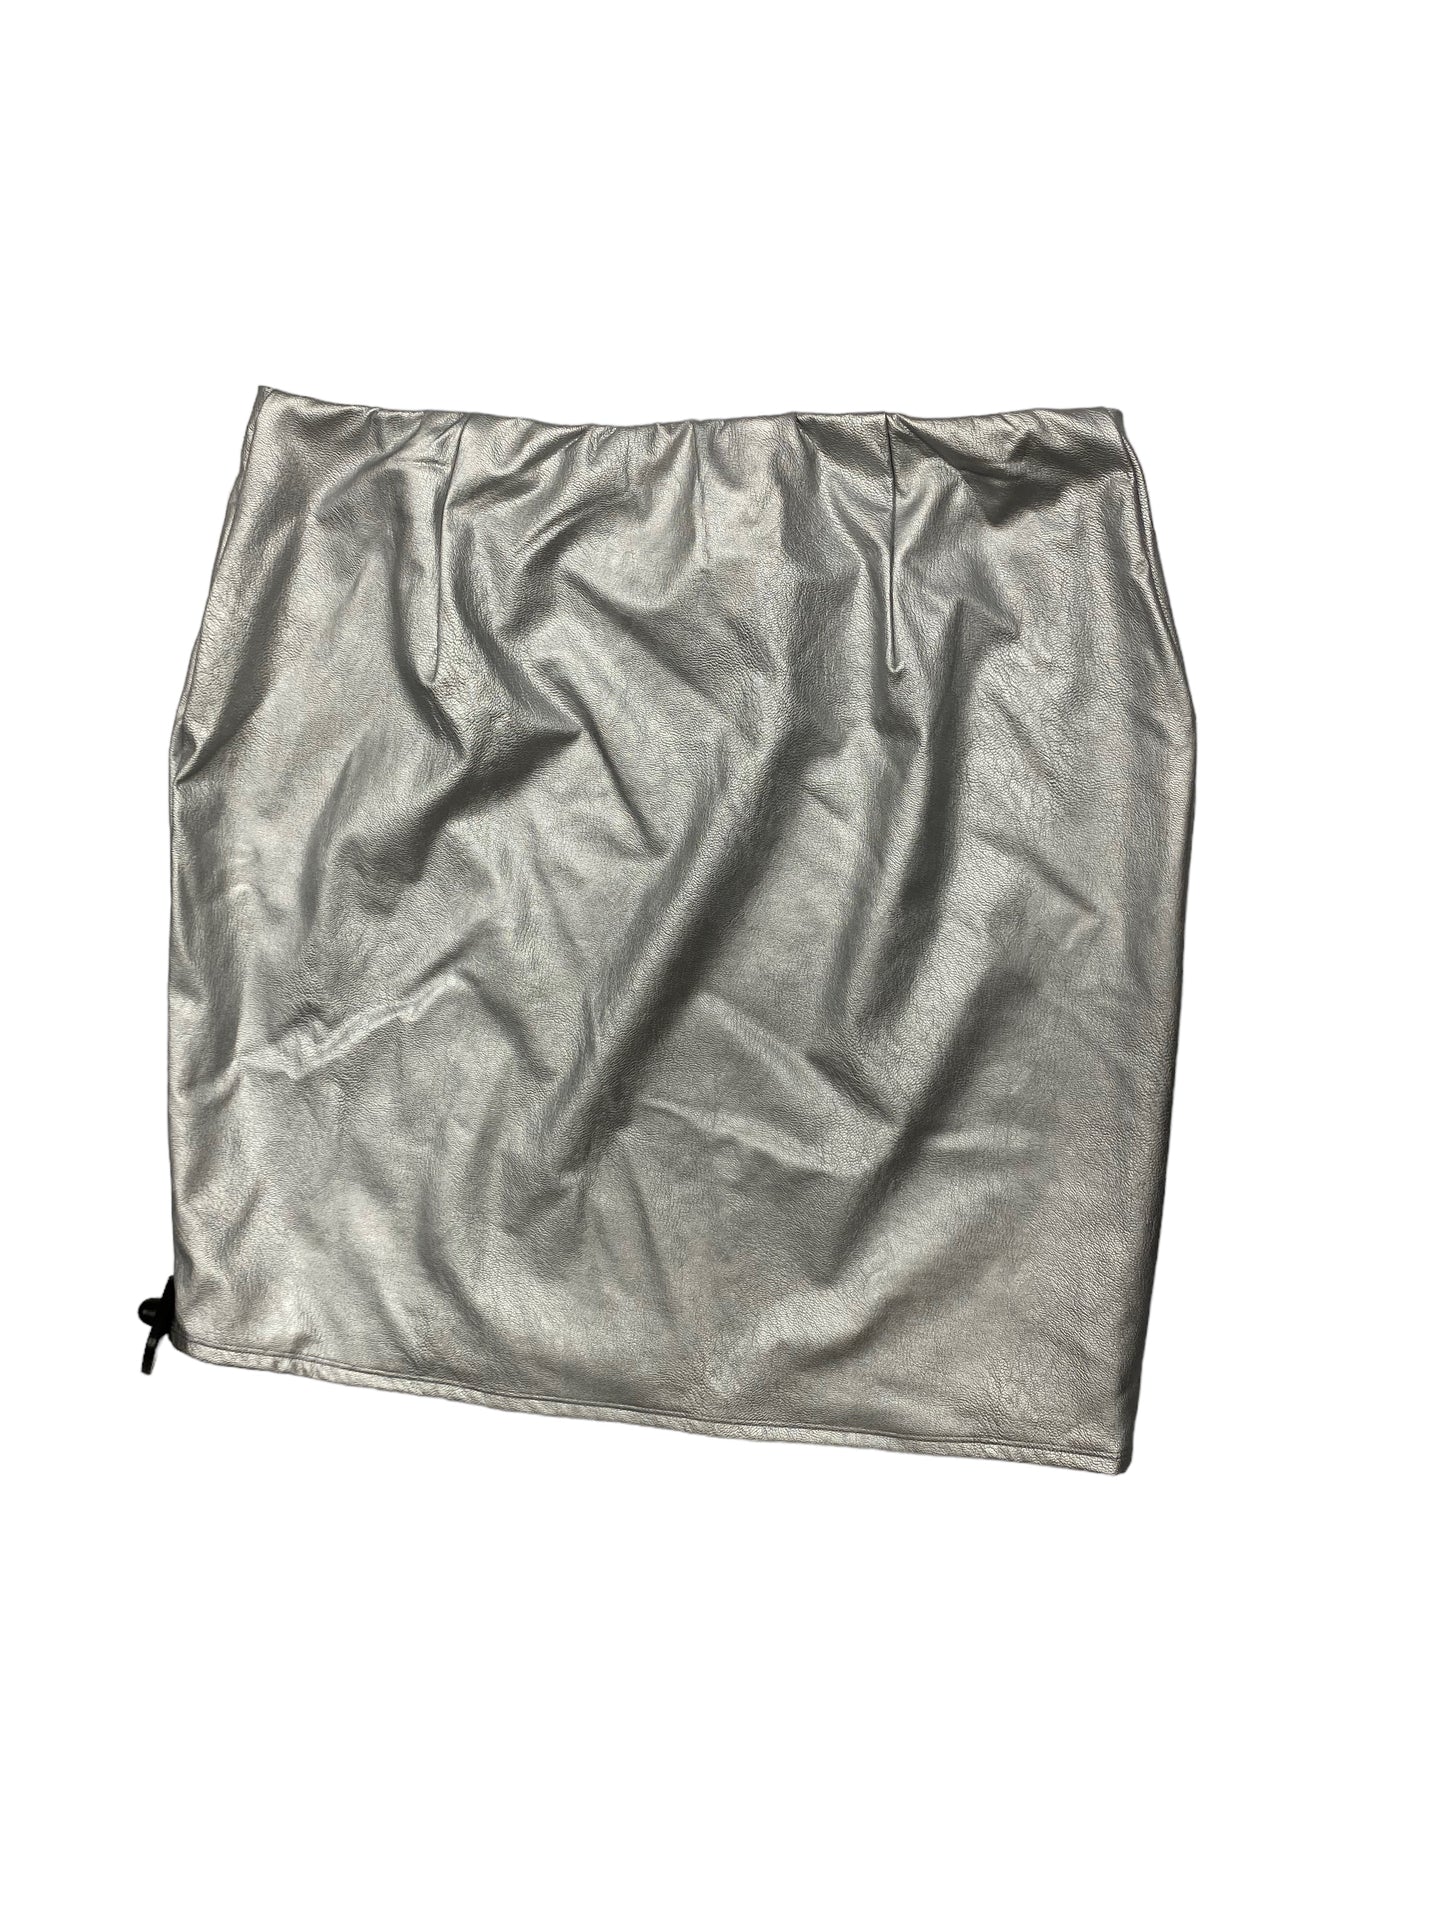 Silver Skirt Mini & Short naked wardrobe, Size 1x